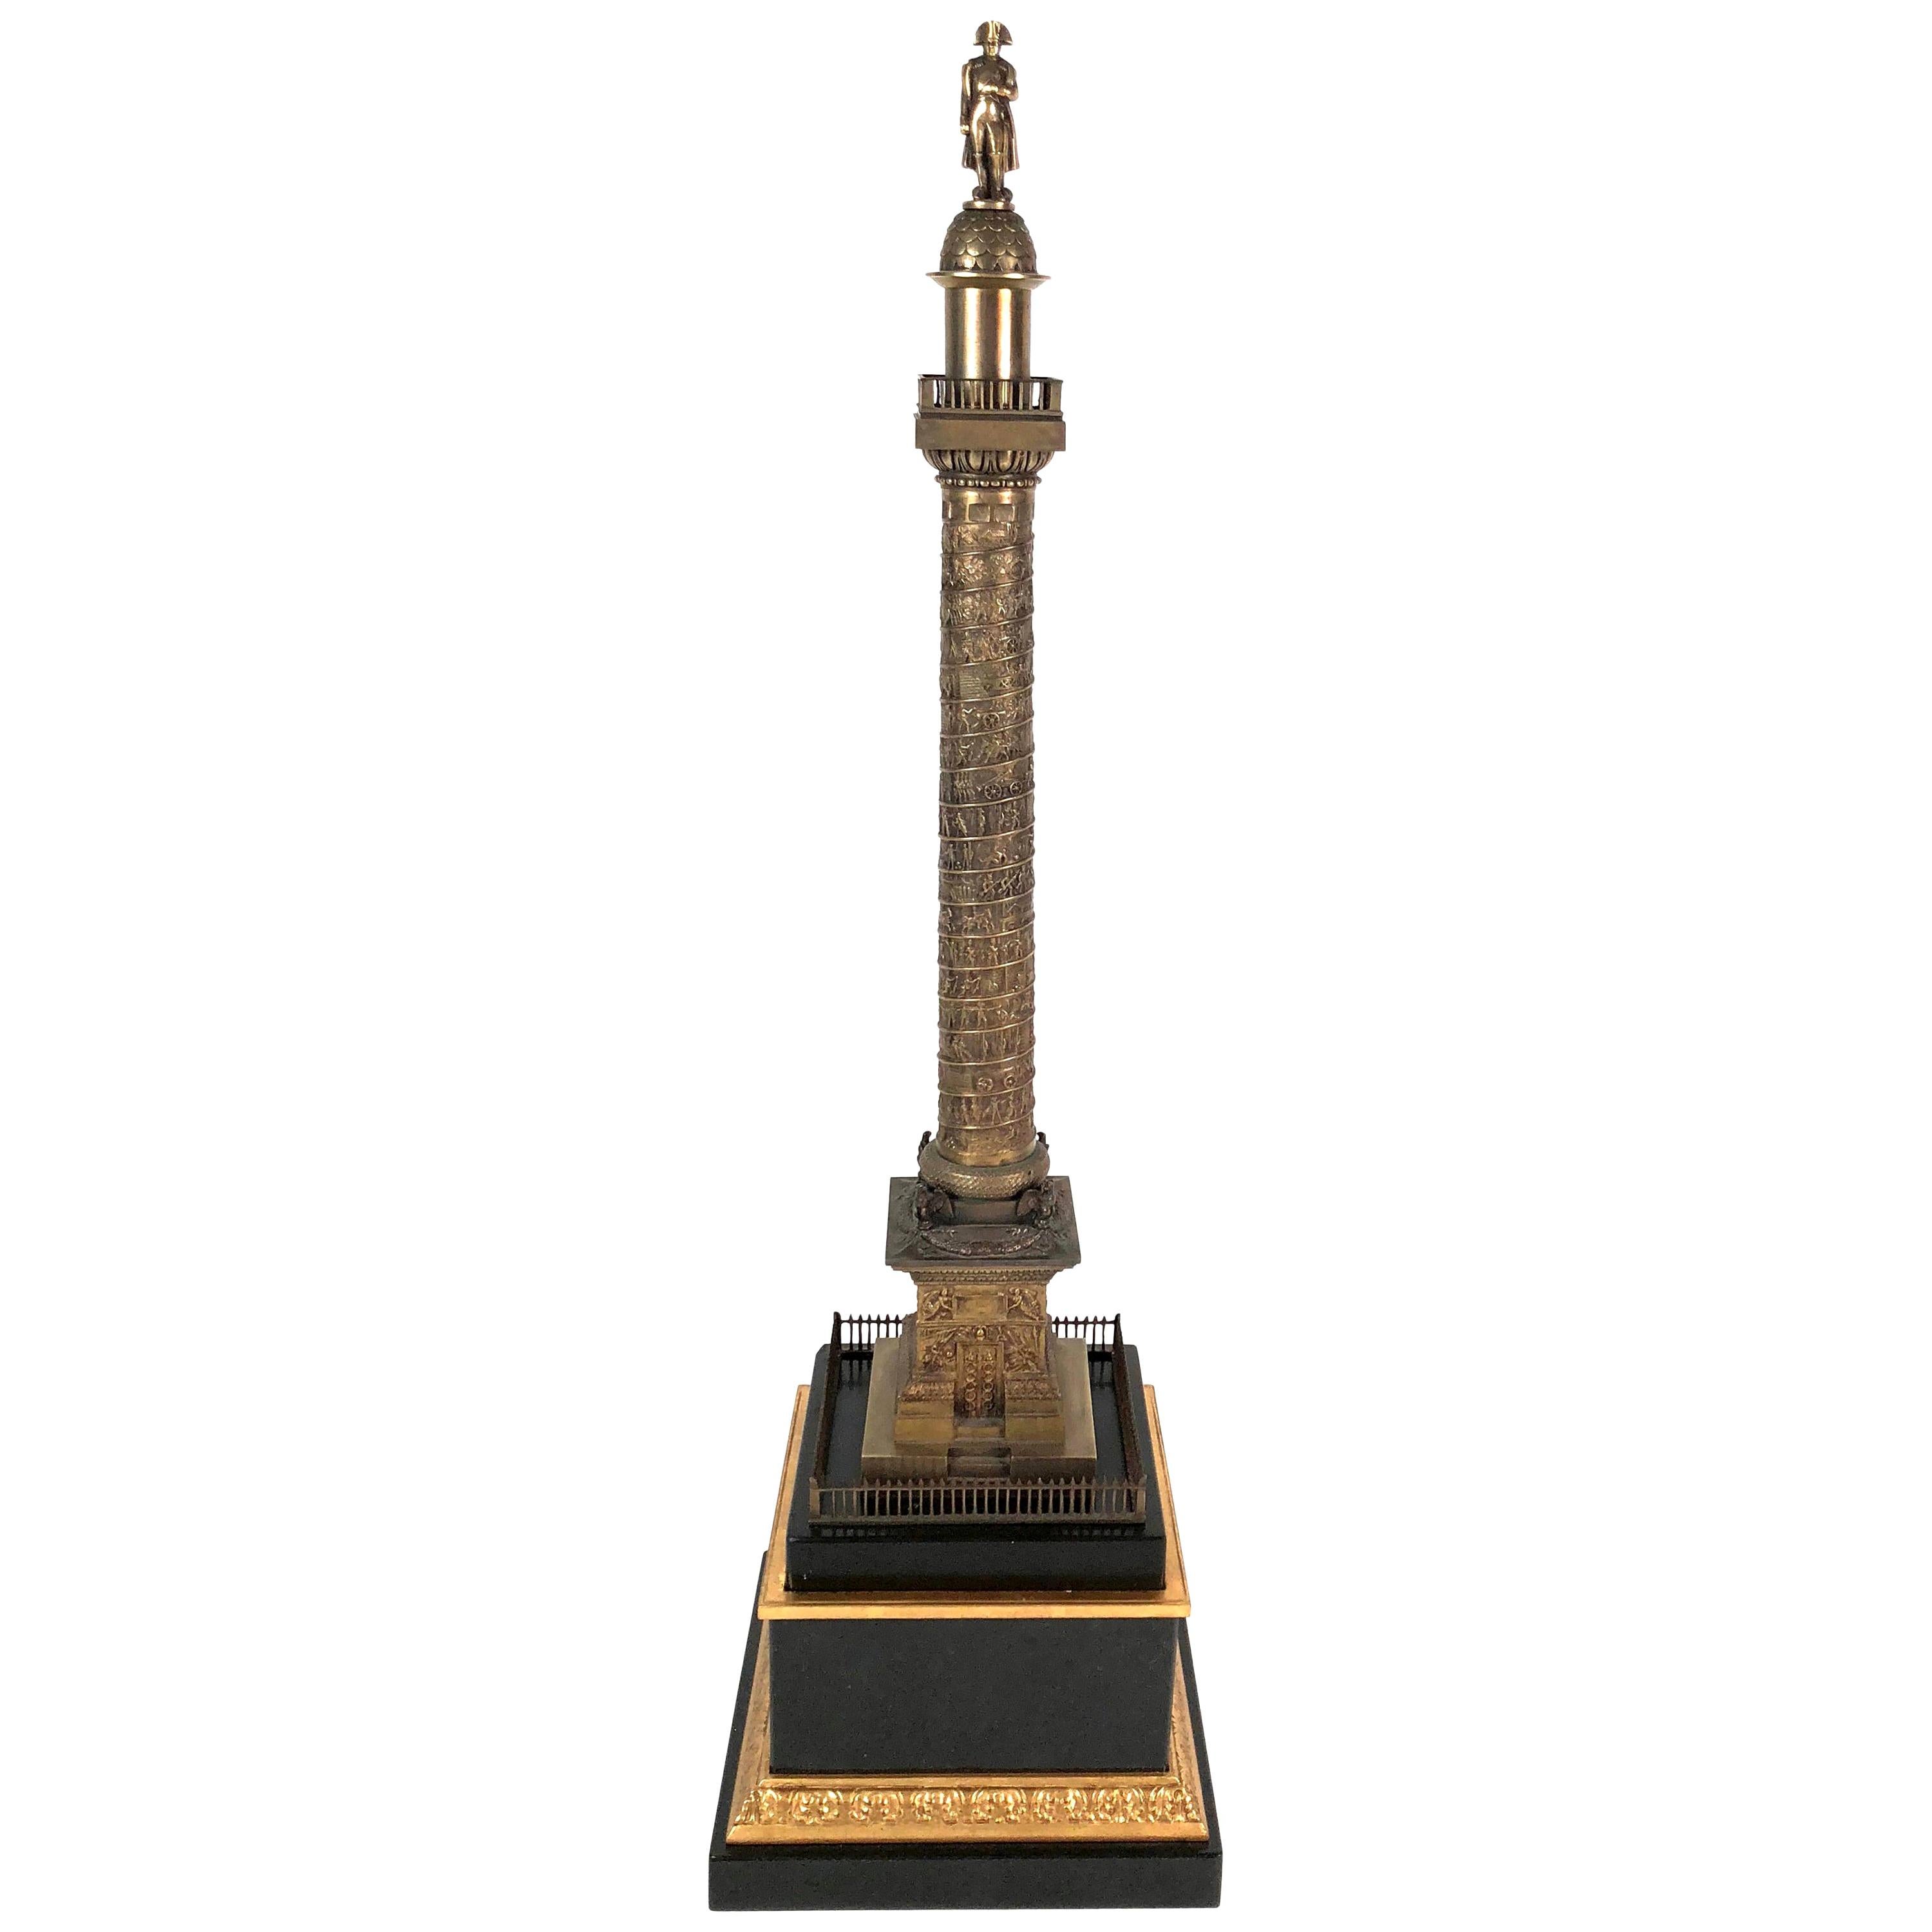 Large Grand Tour Gilt Bronze Model of the Place Vendome Napoleon Column in Paris